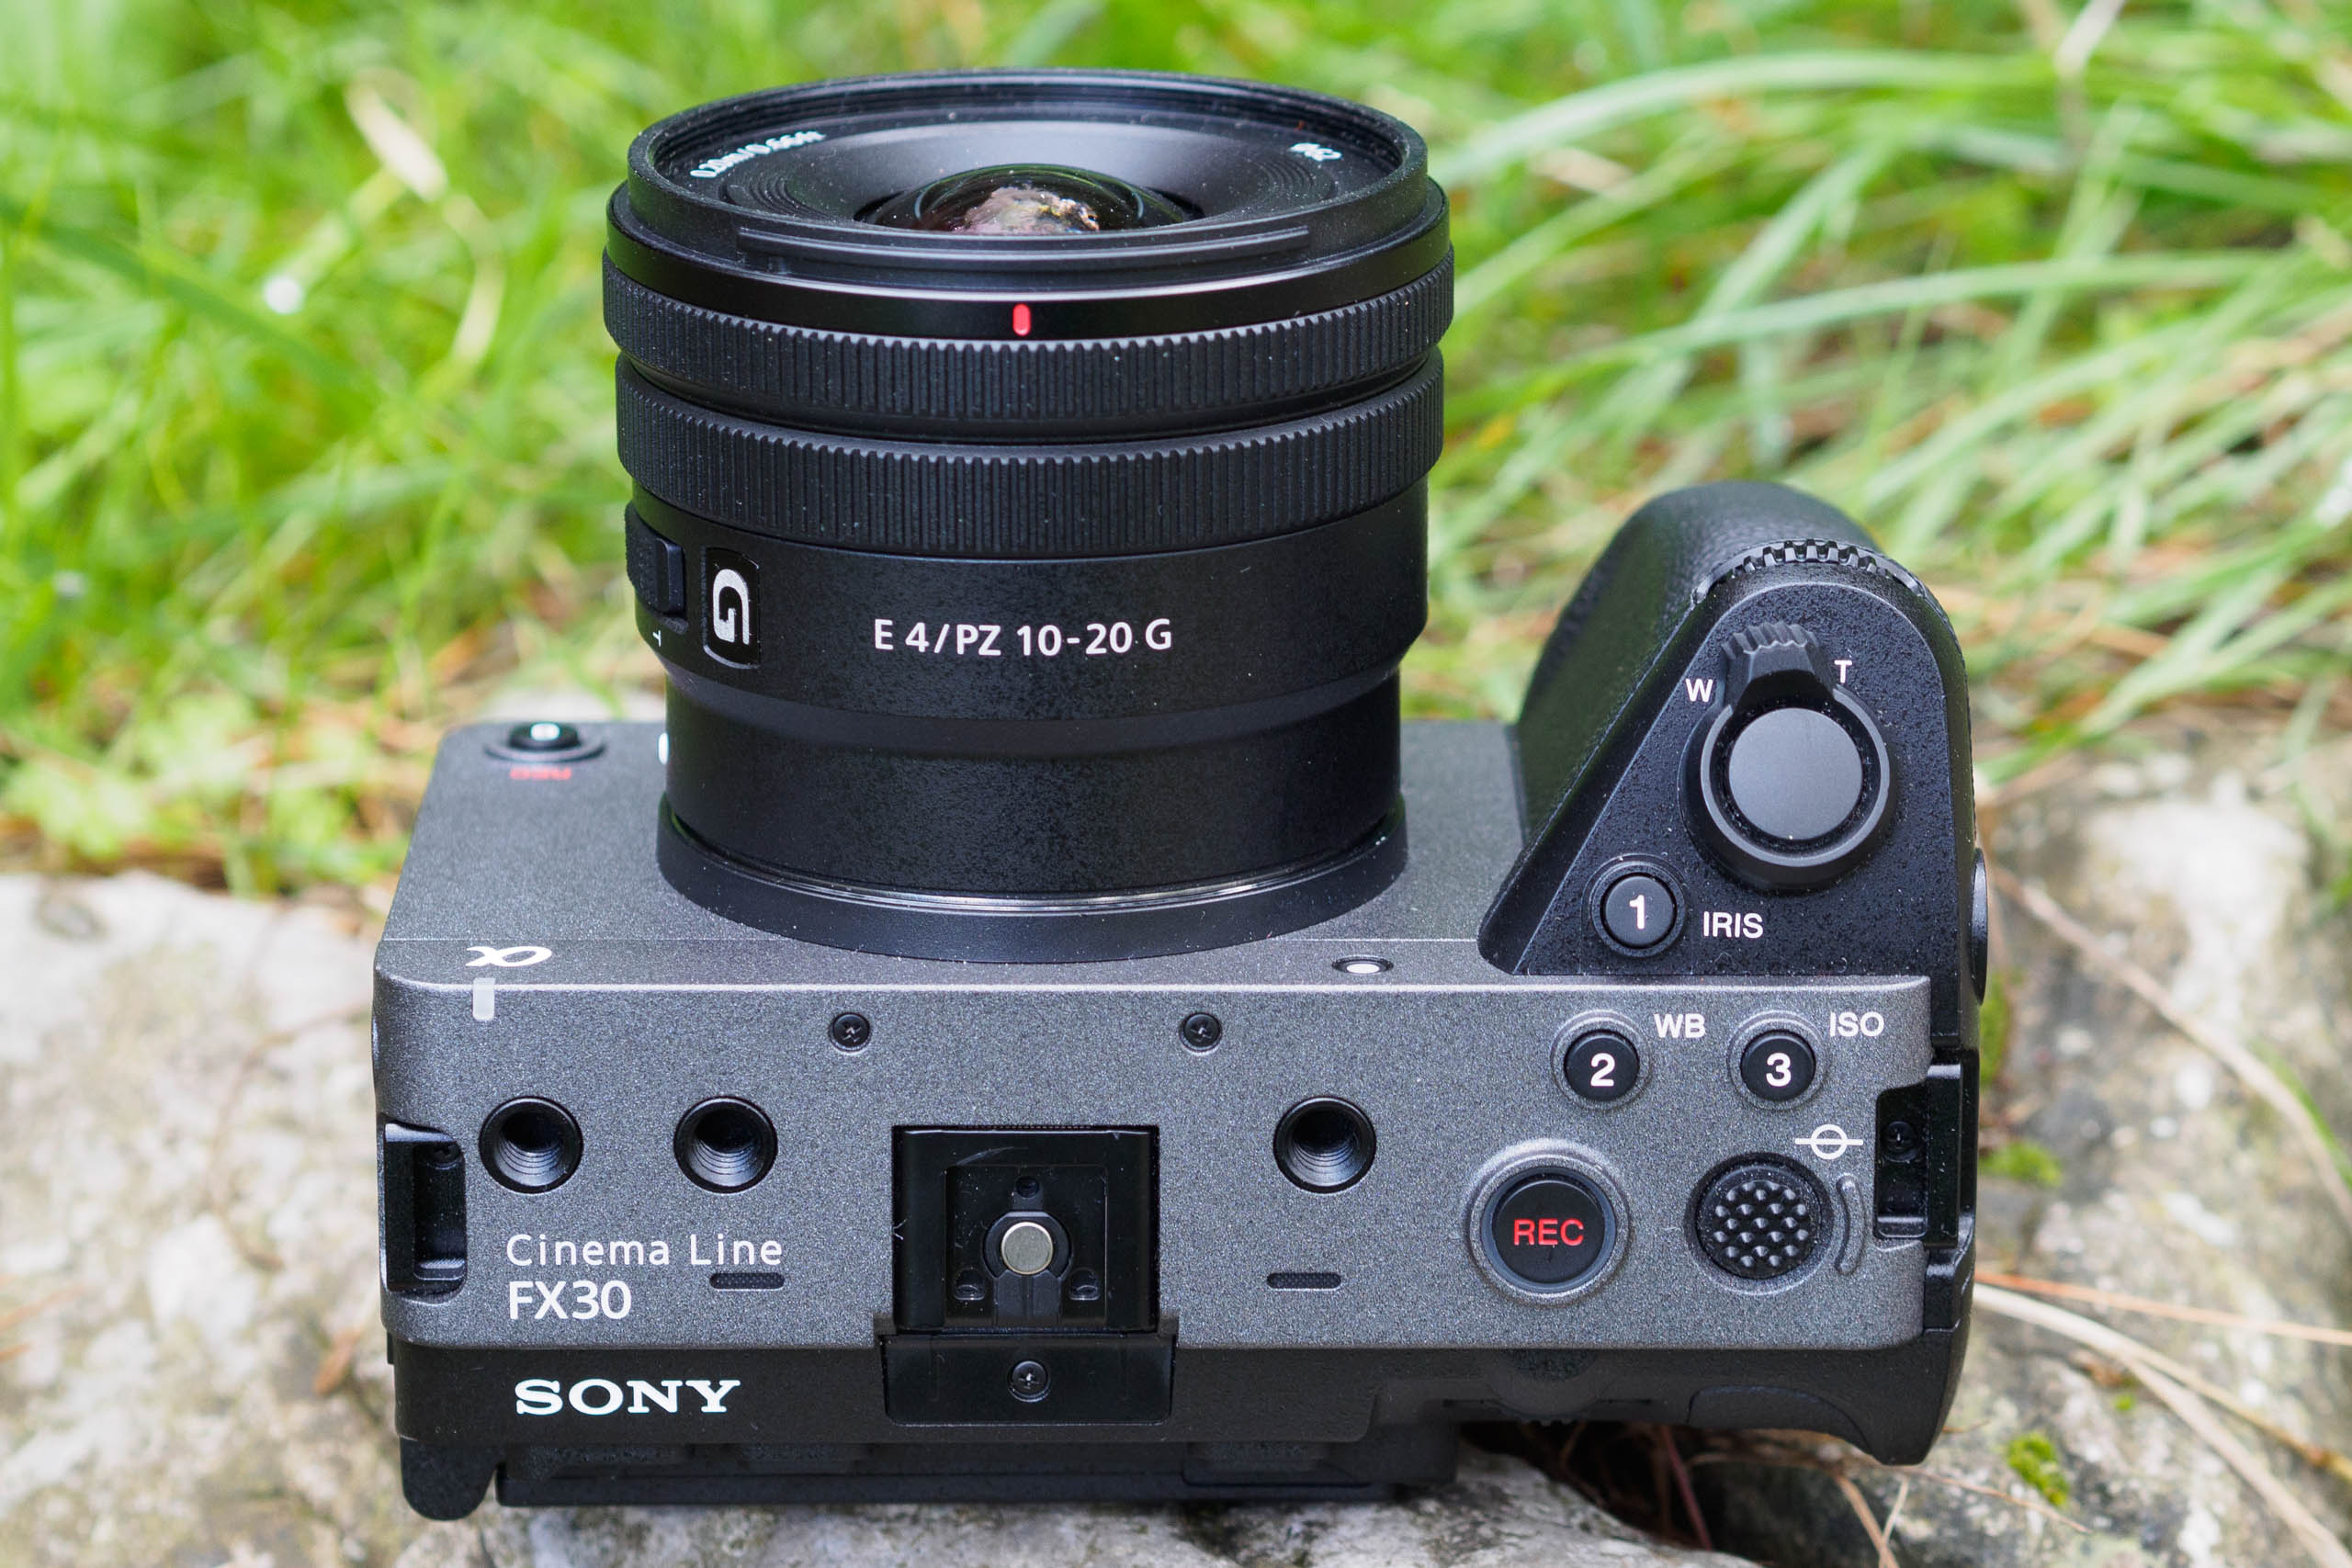 Opsommen spiegel Onderdompeling Sony FX30 review: APS-C cinema camera - Amateur Photographer